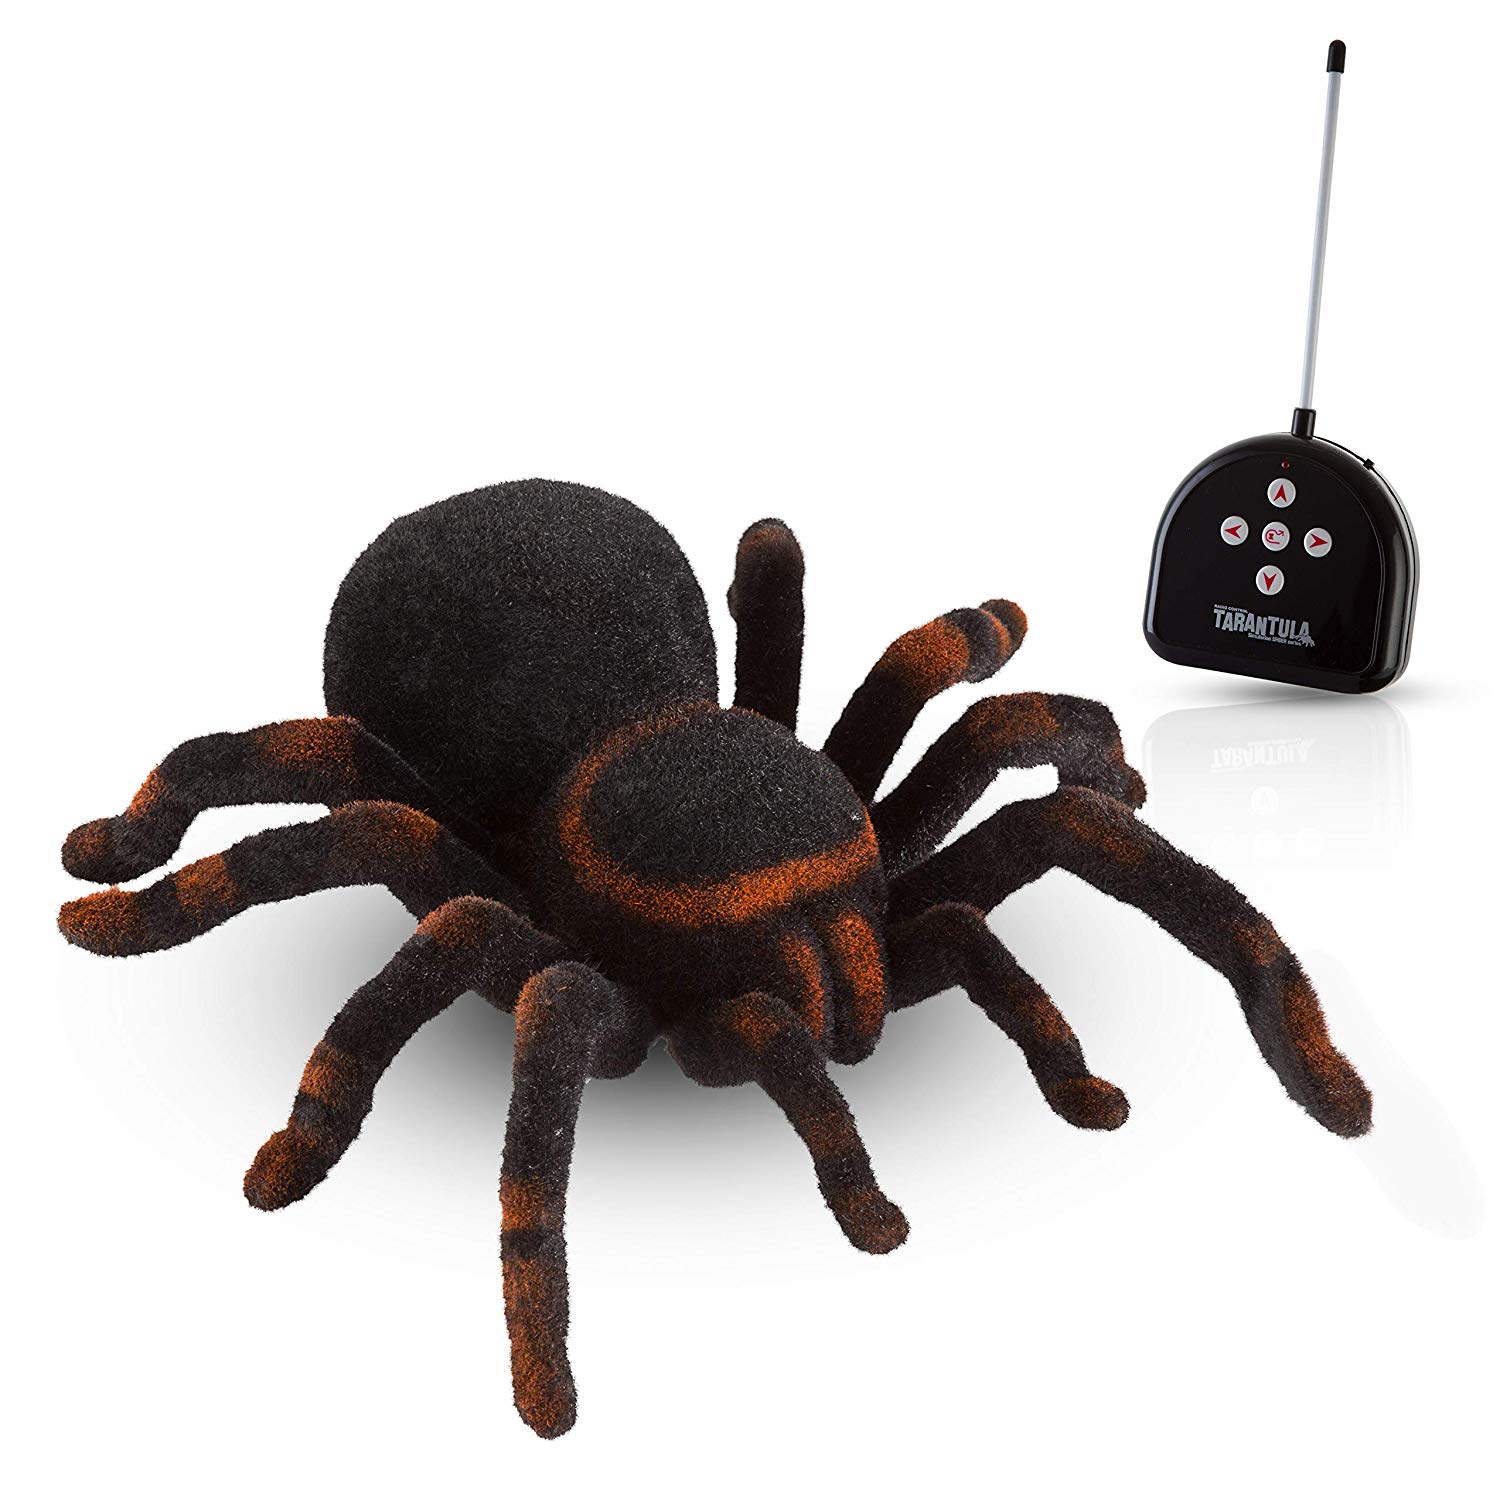 Advanced Play Remote Control Spider